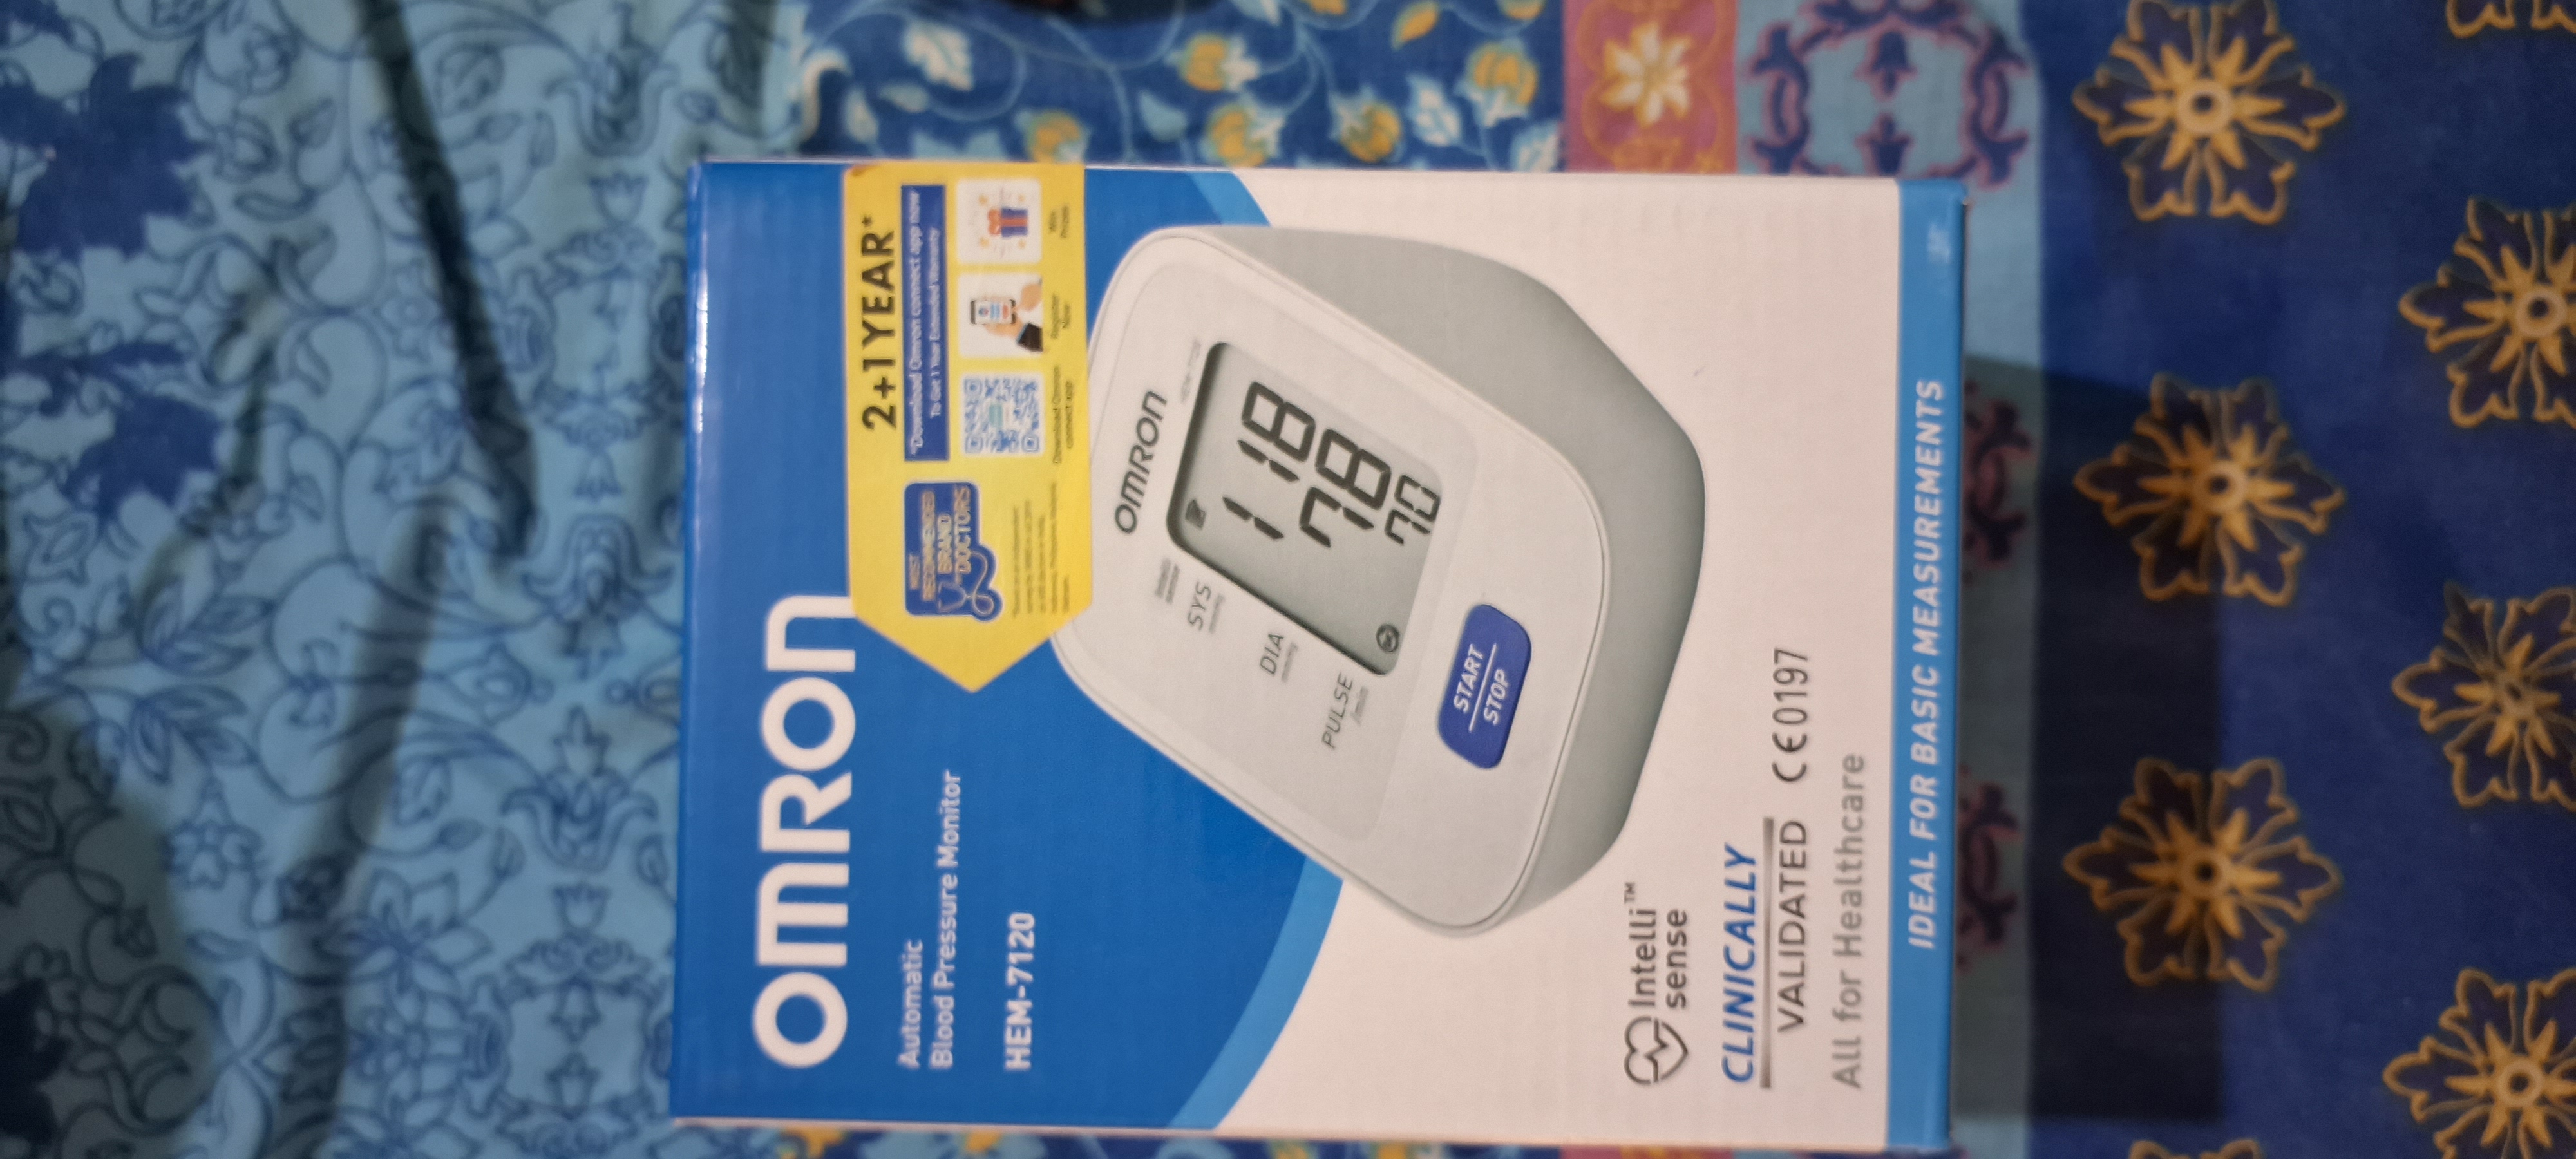 Omron Automatic Blood Pressure Monitor (HEM-7120)